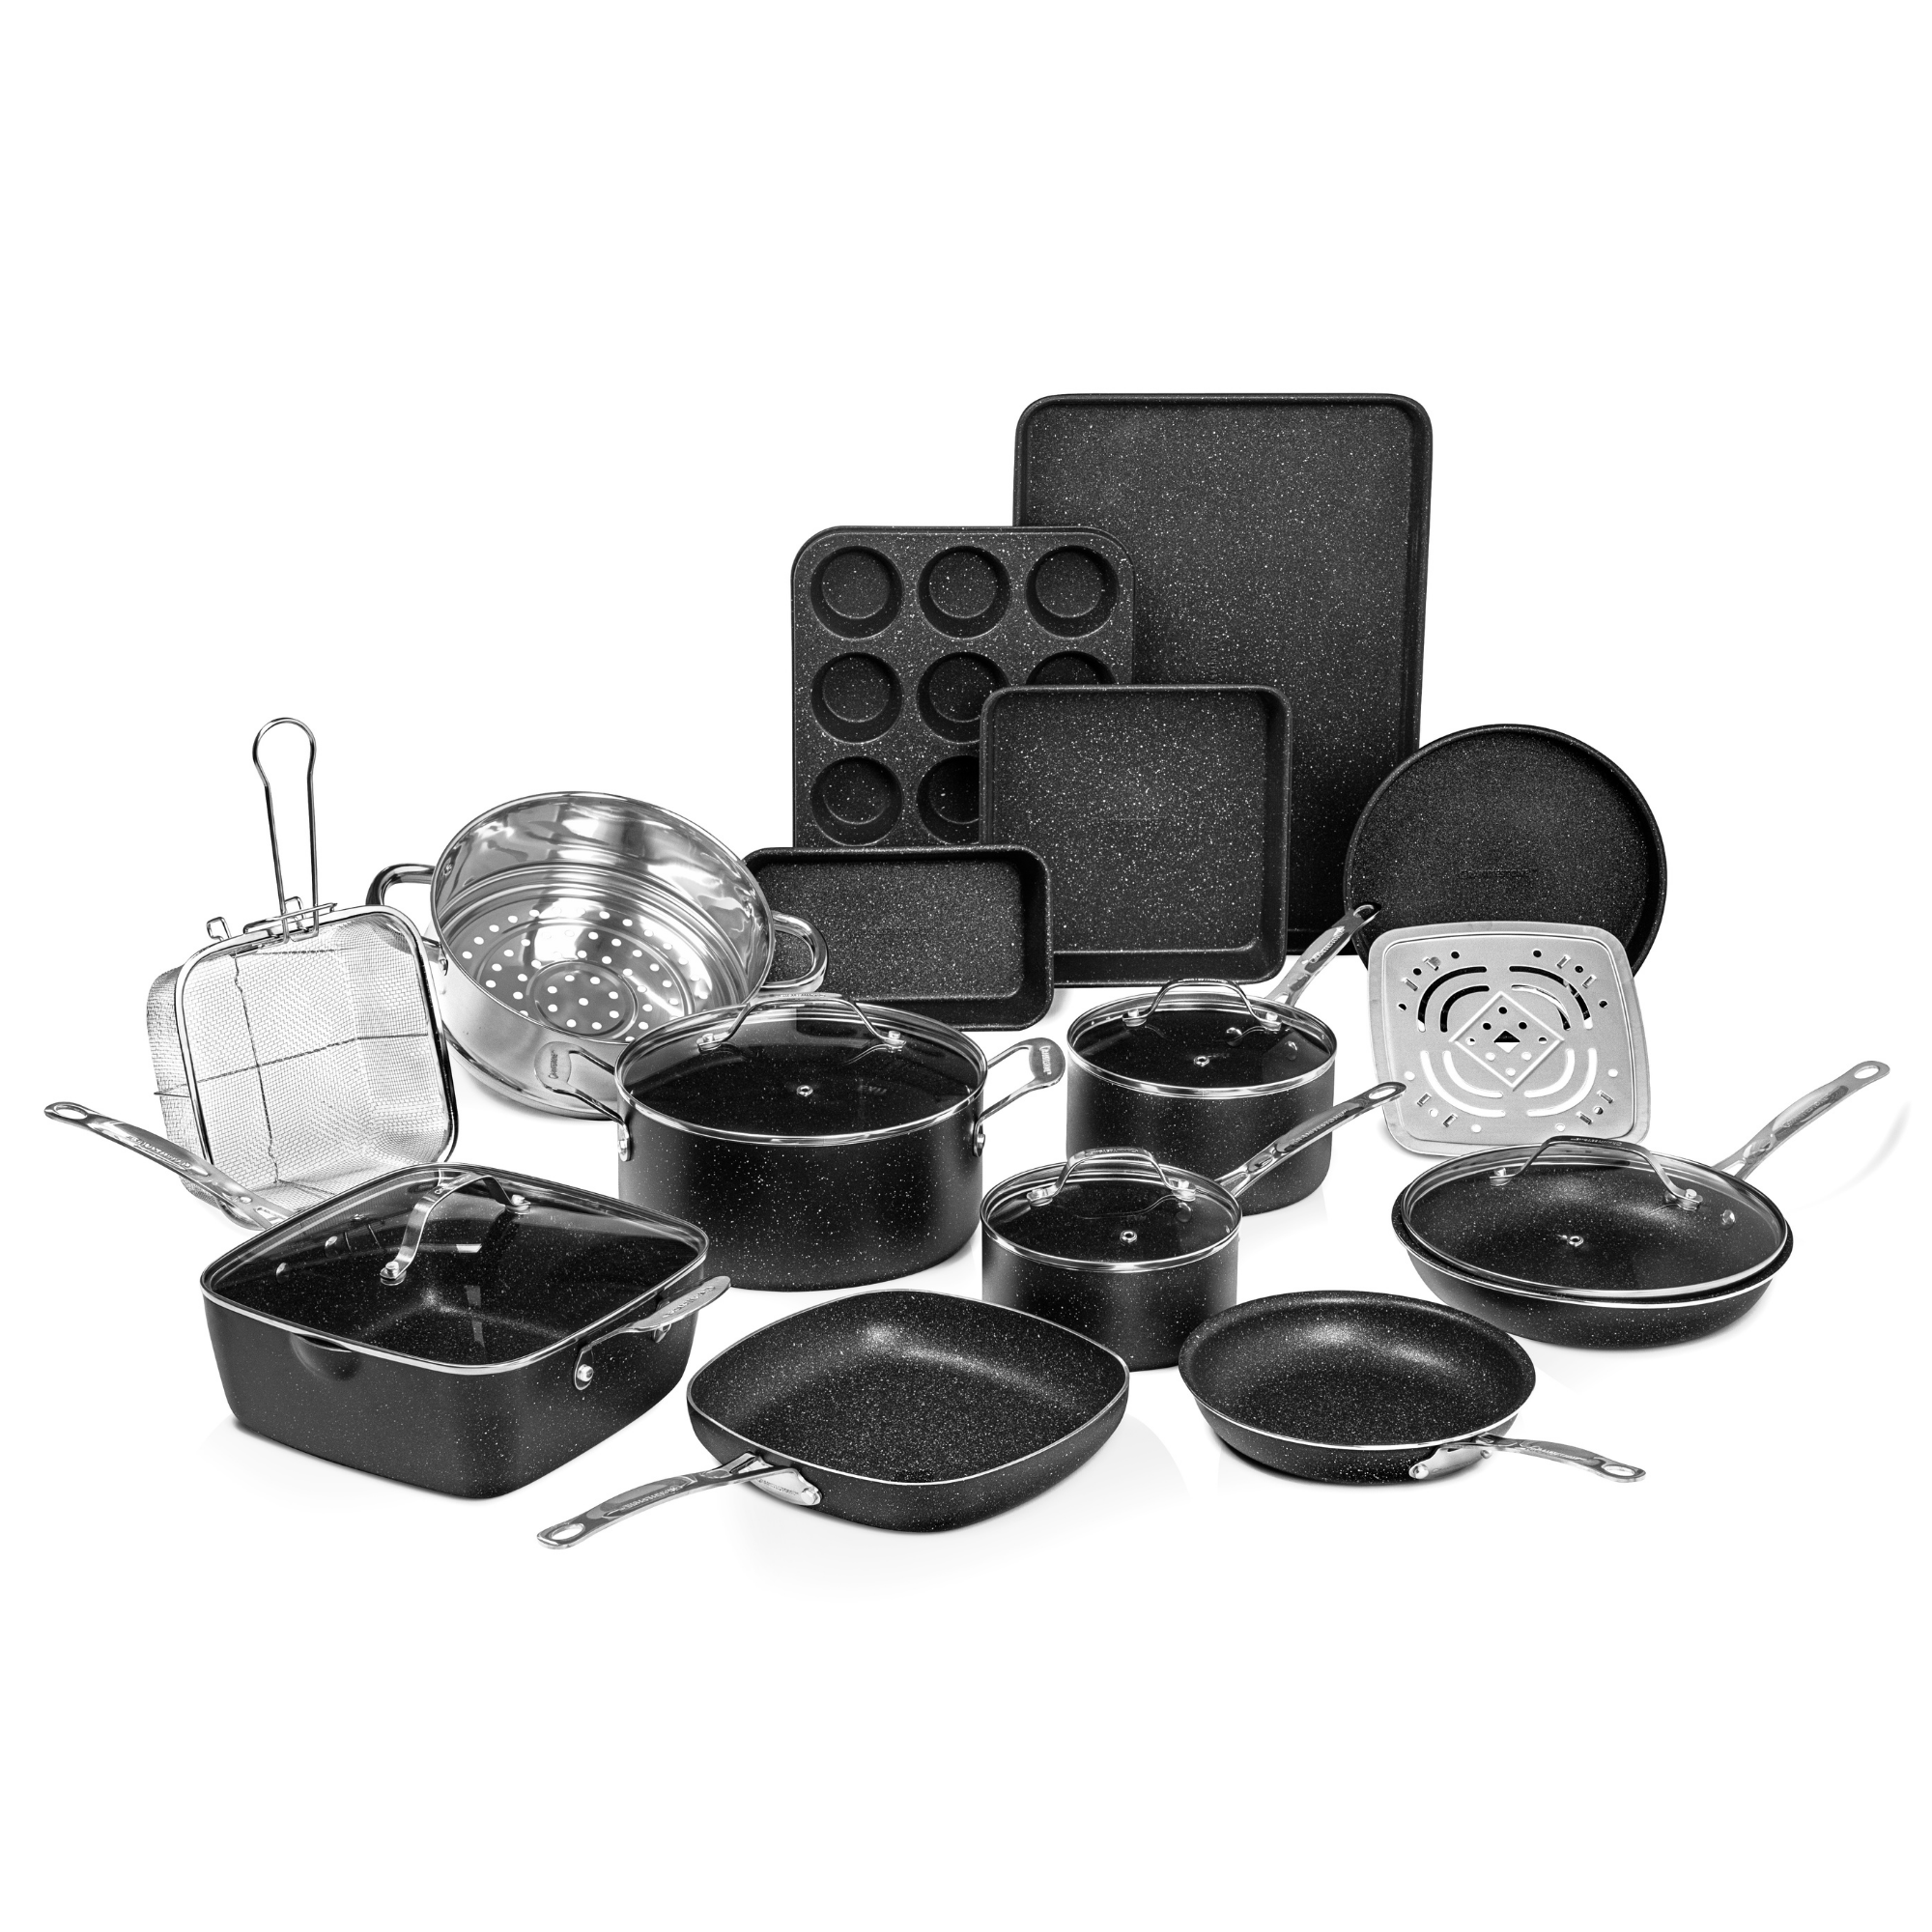 Granitestone Armor Max 20 Piece Hard Anodized Cookware Set - Black